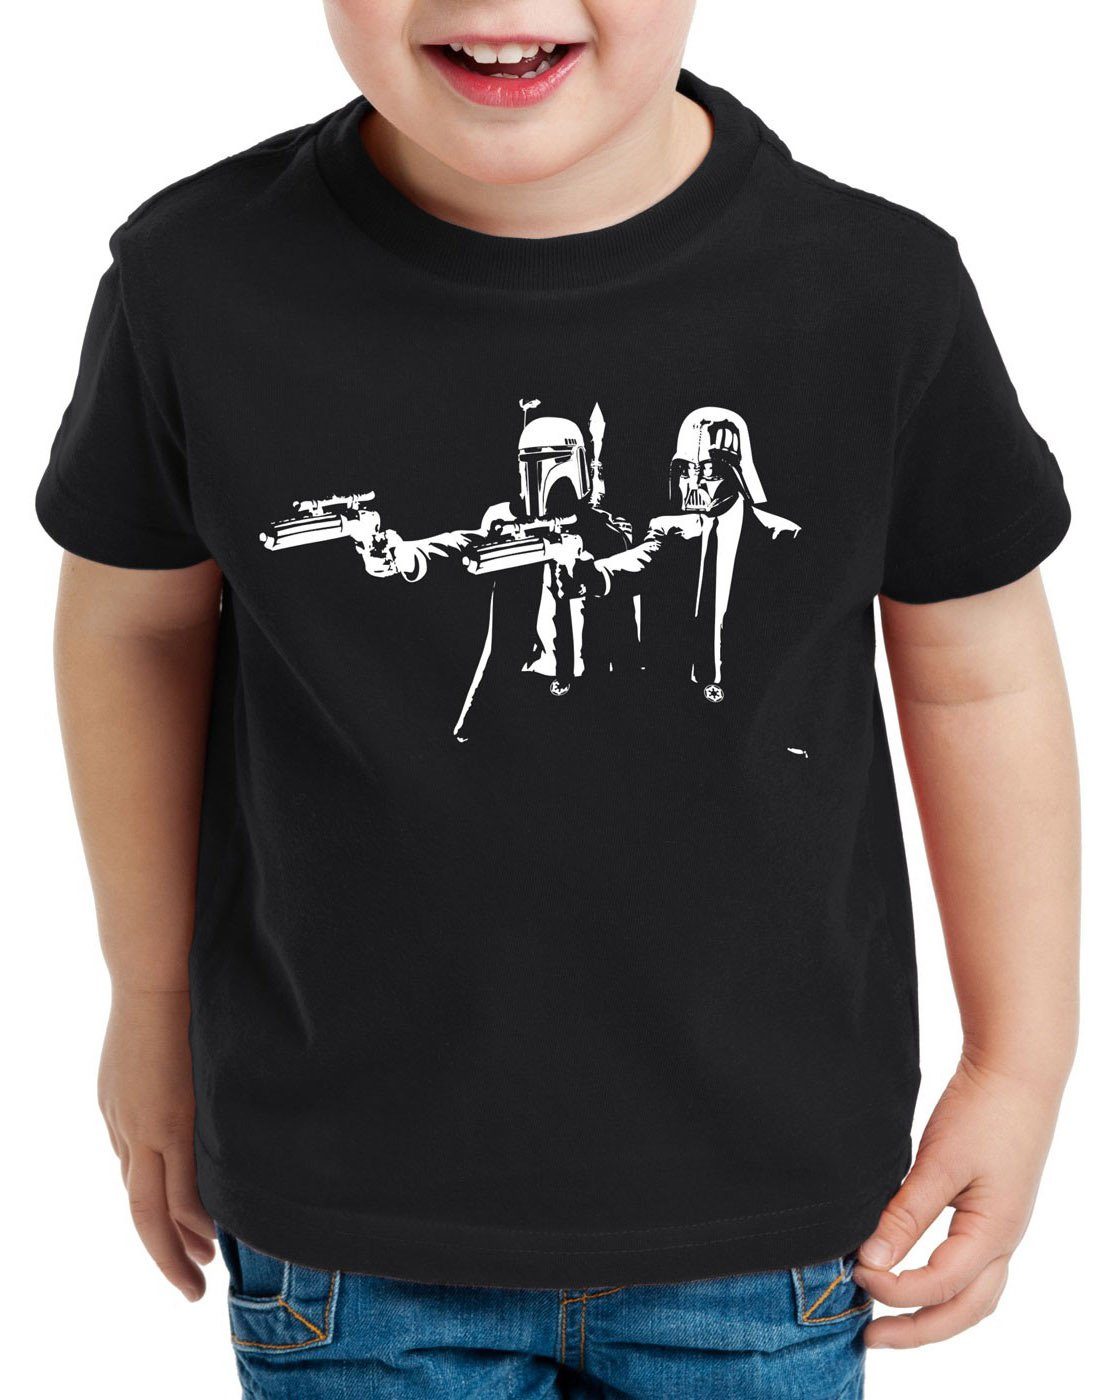 Kinder star T-Shirt schwarz Darth fett style3 boba Print-Shirt Fiction pulp imperium wars